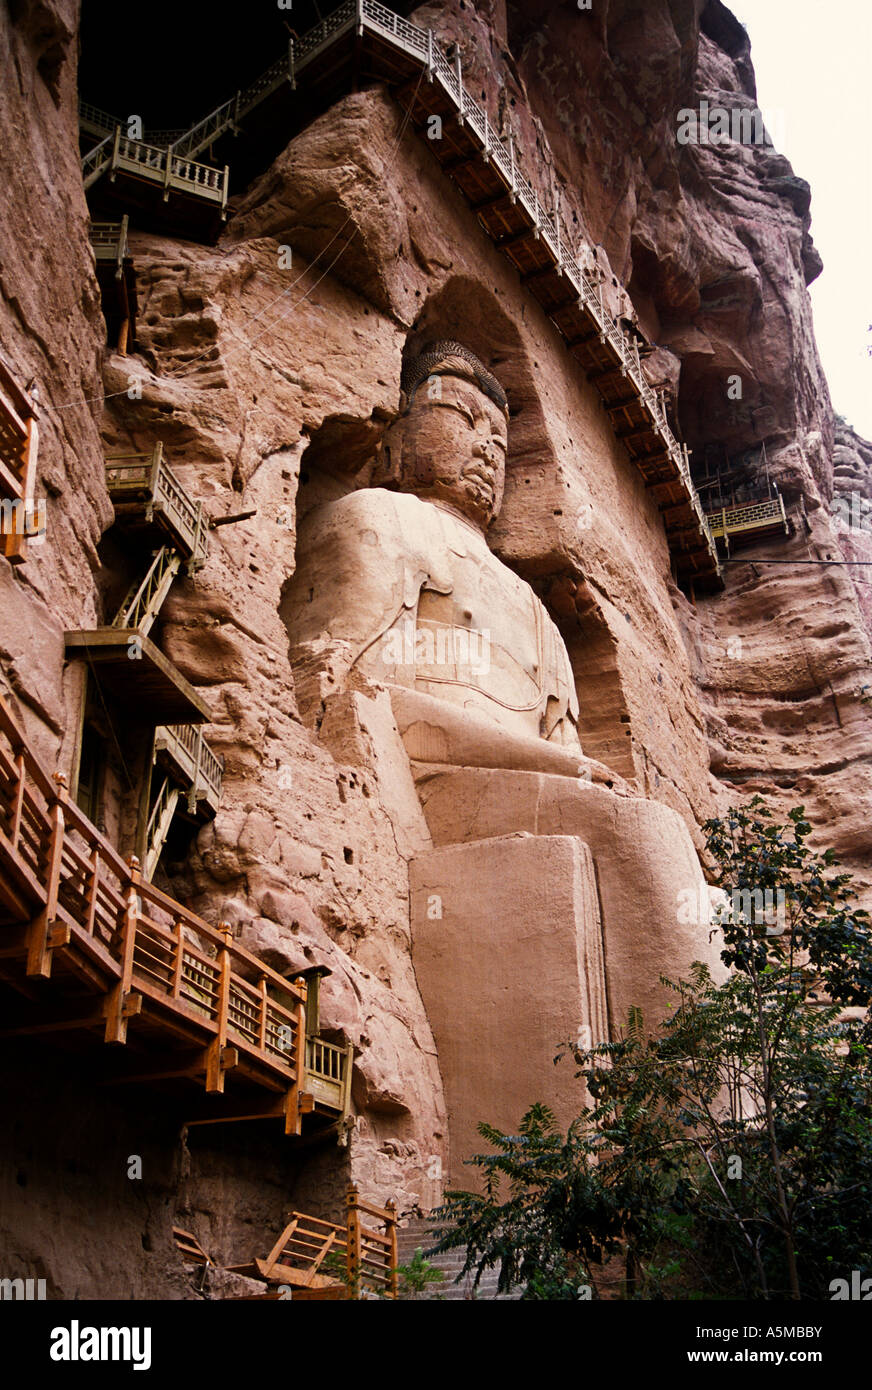 27 meter high Maitreya Buddha at Bingling Si caves Gansu, China Stock Photo